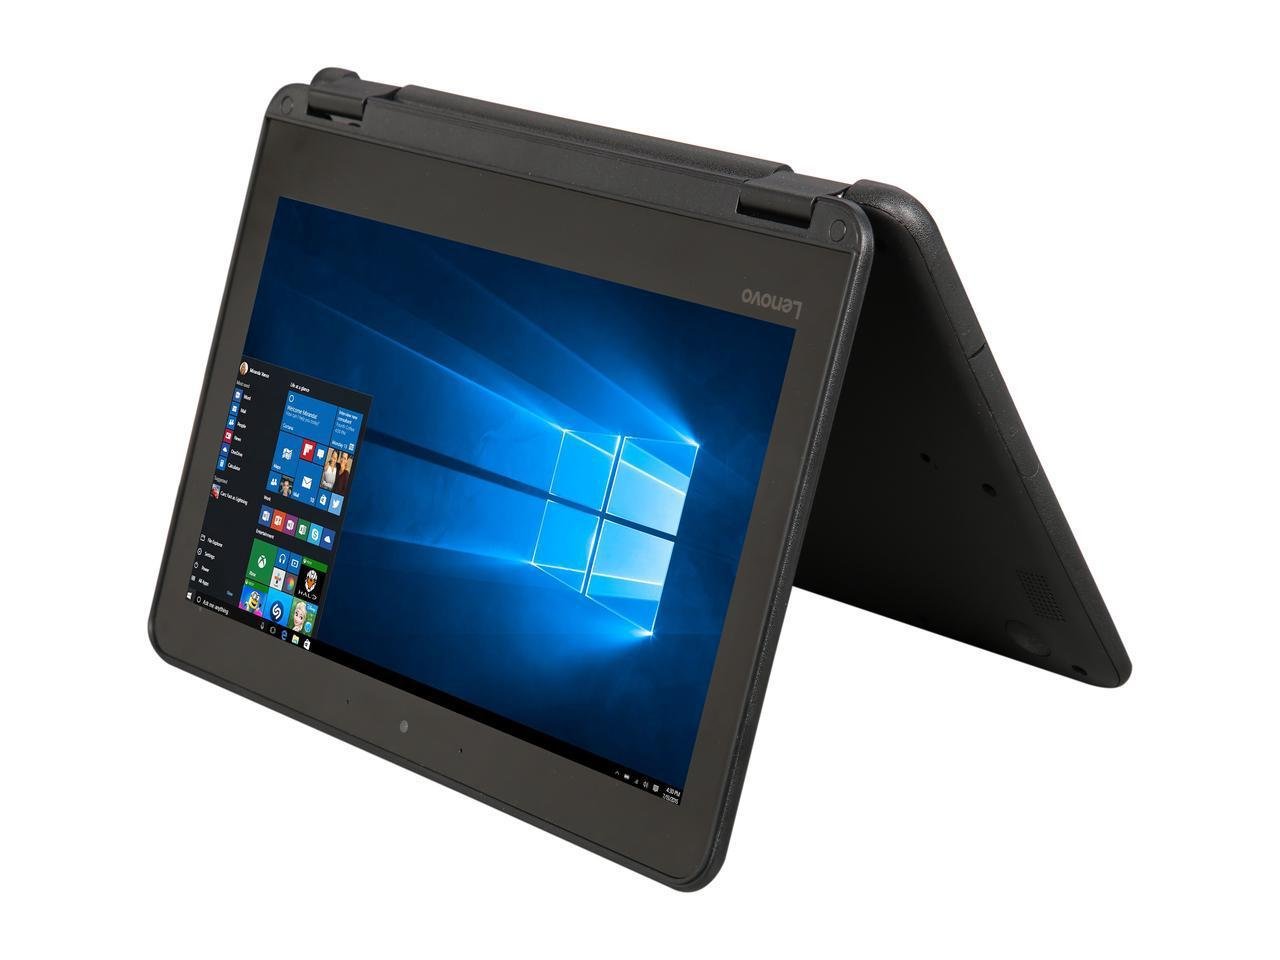 Lenovo N23 11.6-inch IPS Anti-Glare Touchscreen 2-in-1 Business Laptop, Intel Celeron N3060, 4GB RAM, 128GB Solid State Drive, Windows 10 Professional